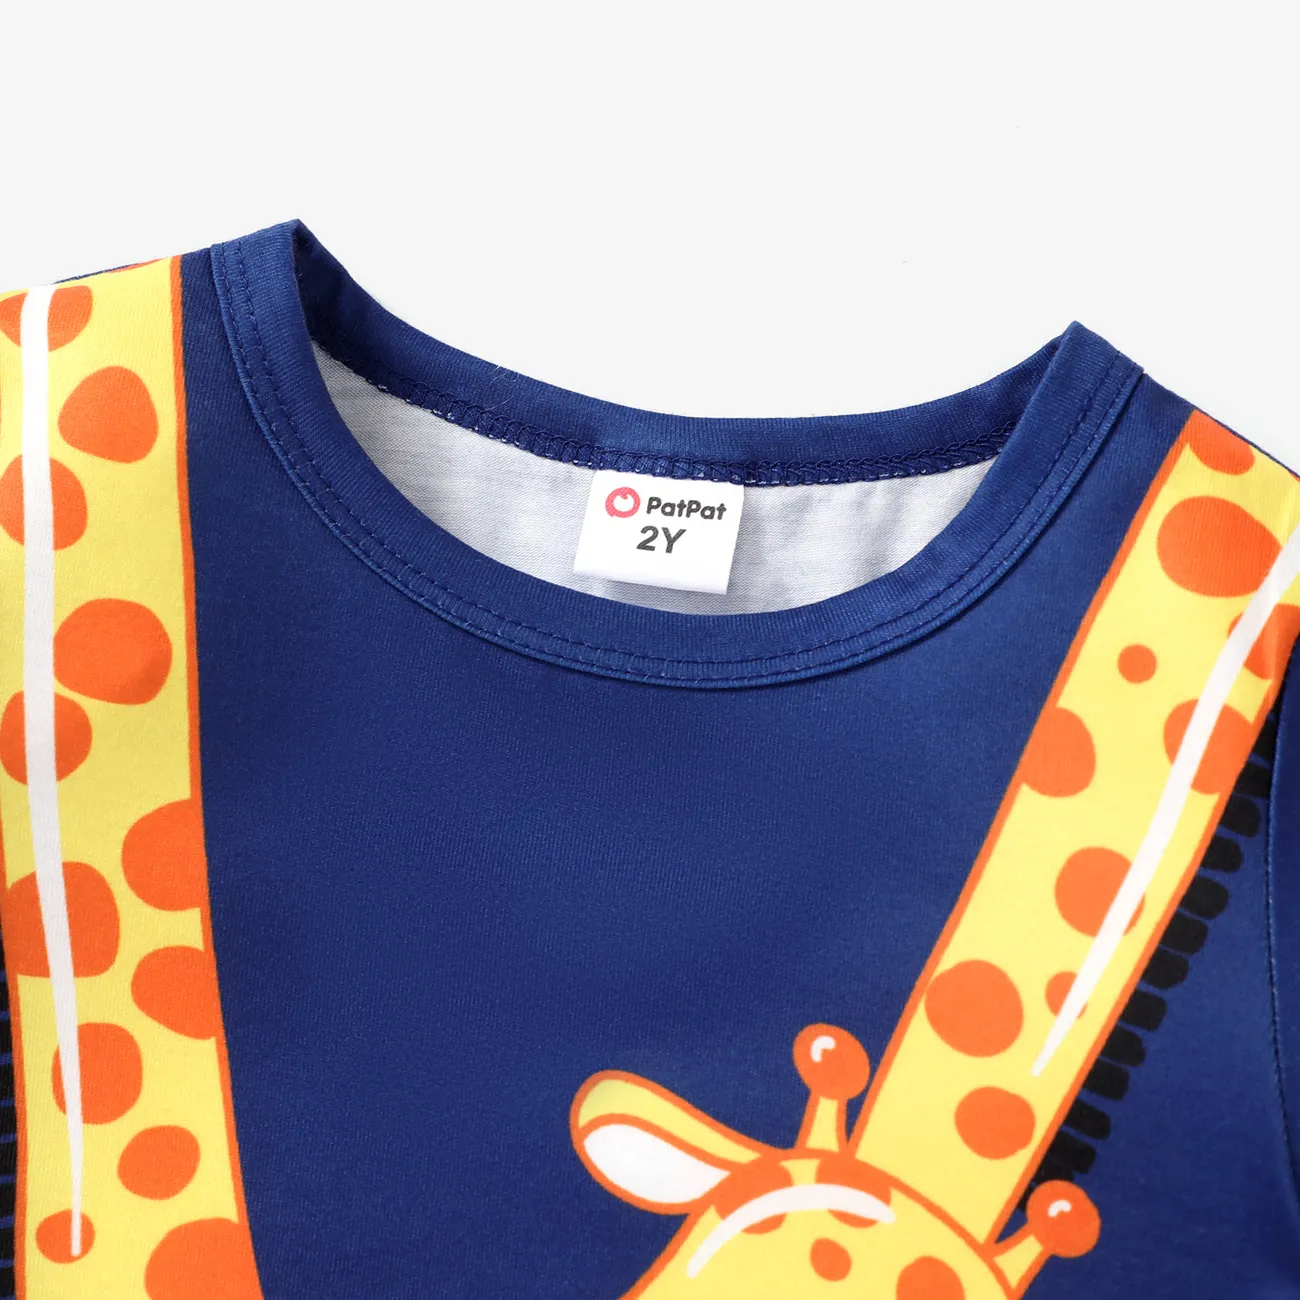 Enfant en bas âge Garçon Enfantin Girafe Manches courtes T-Shirt bleu royal big image 1